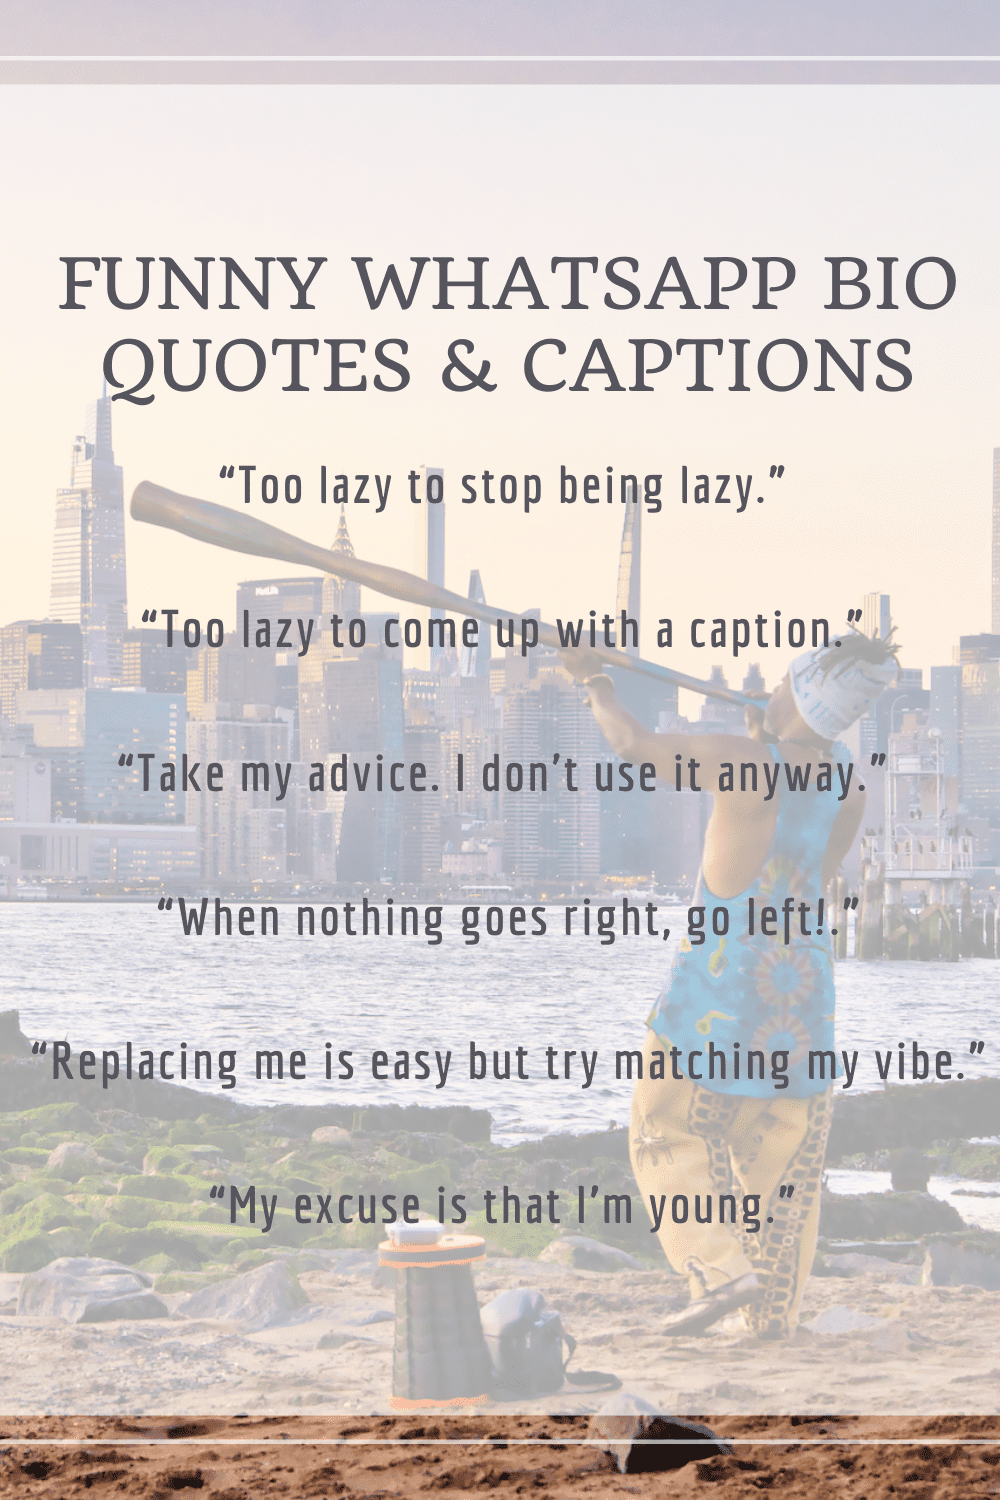 Funny Quotes for WhatsApp Bio